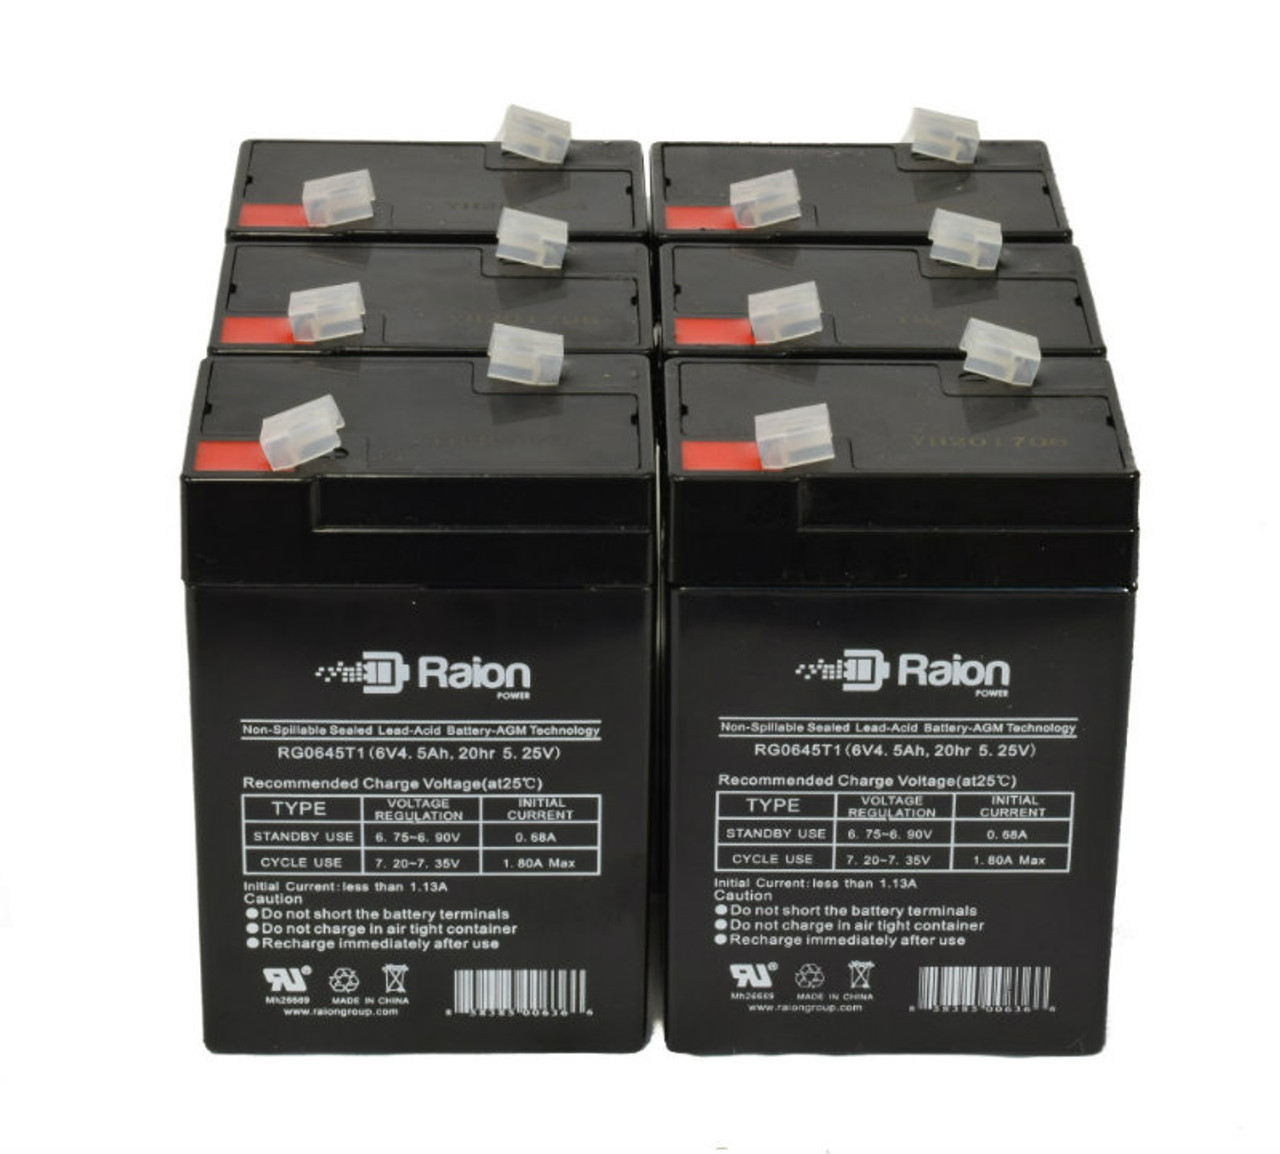 Raion Power 6 Volt 4.5Ah RG0645T1 Replacement Battery for Q-Batteries 6LS-4.5 - 6 Pack